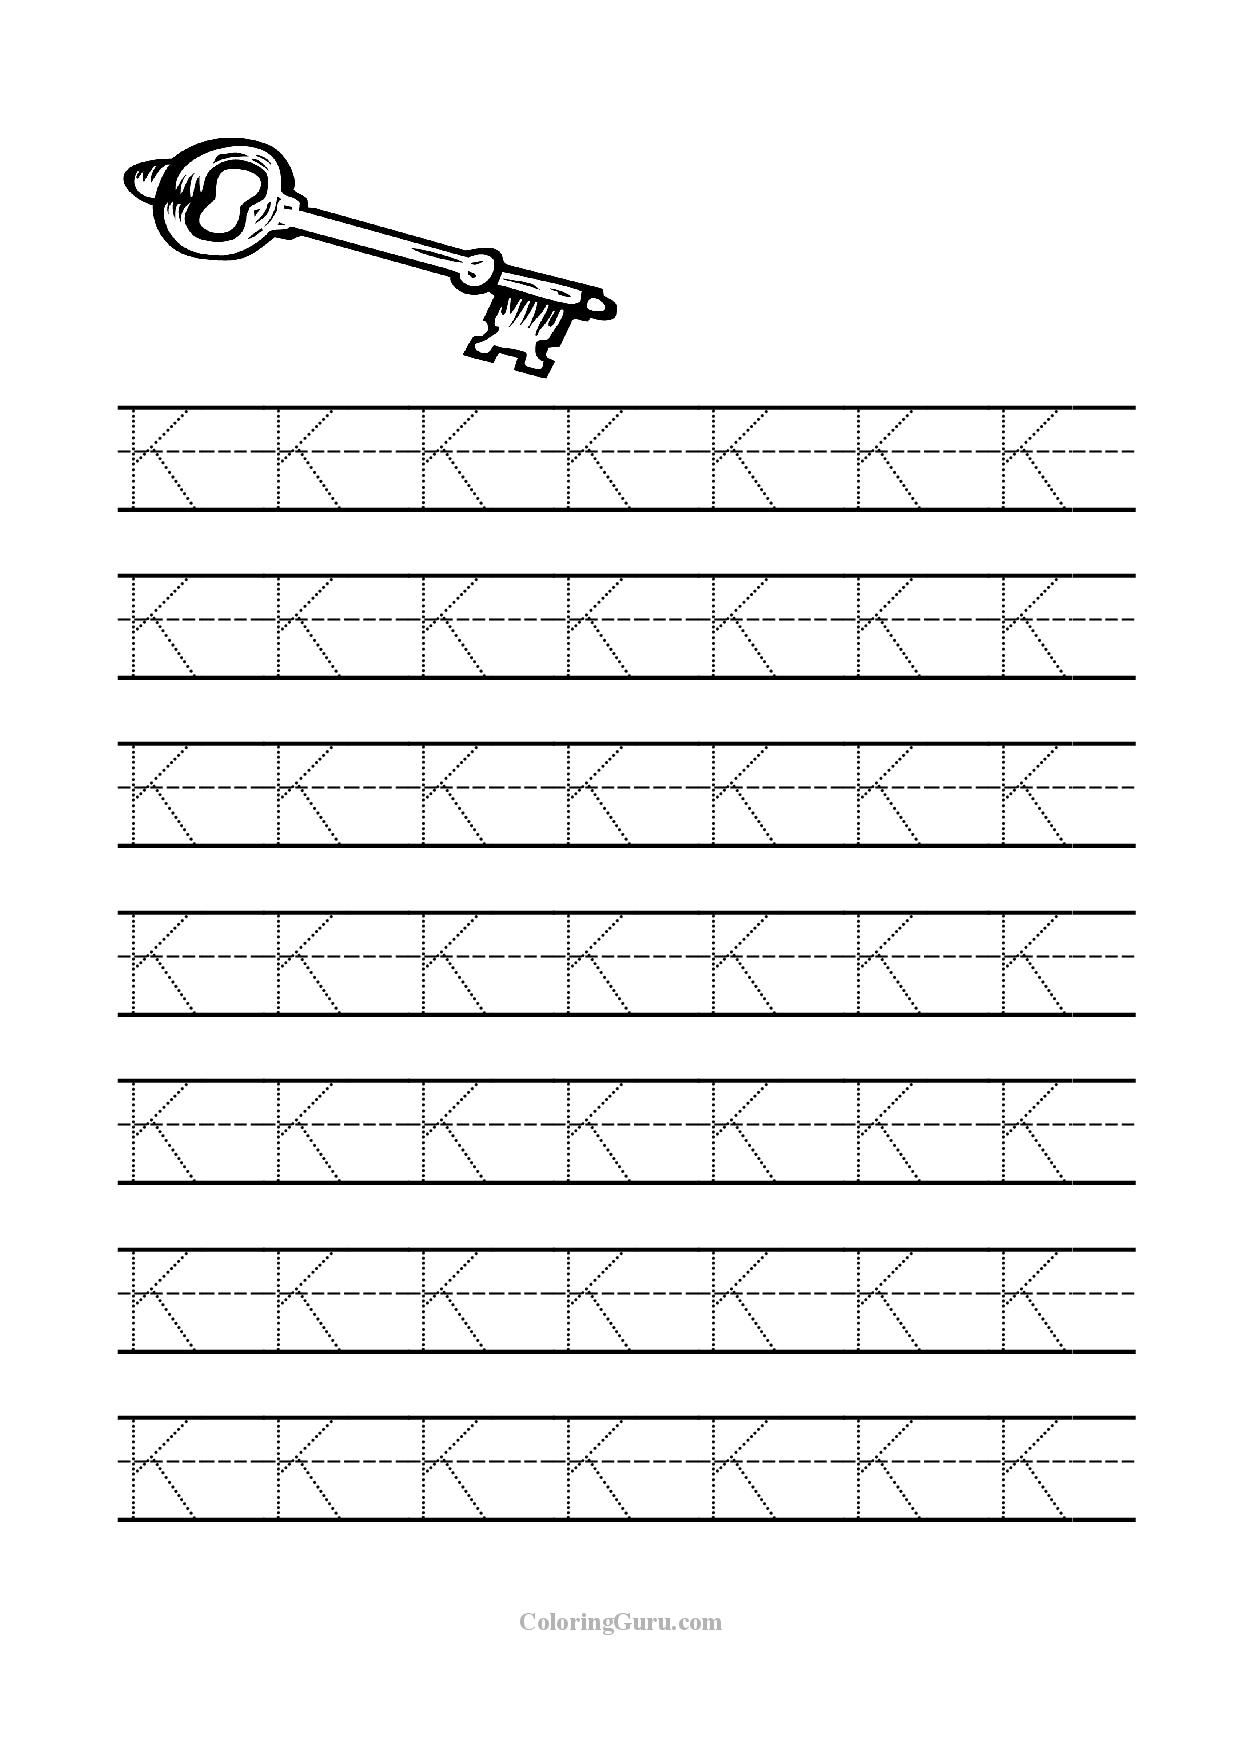 Free Printable Tracing Letter K Worksheets For Preschool | Manuscript Printable Worksheets